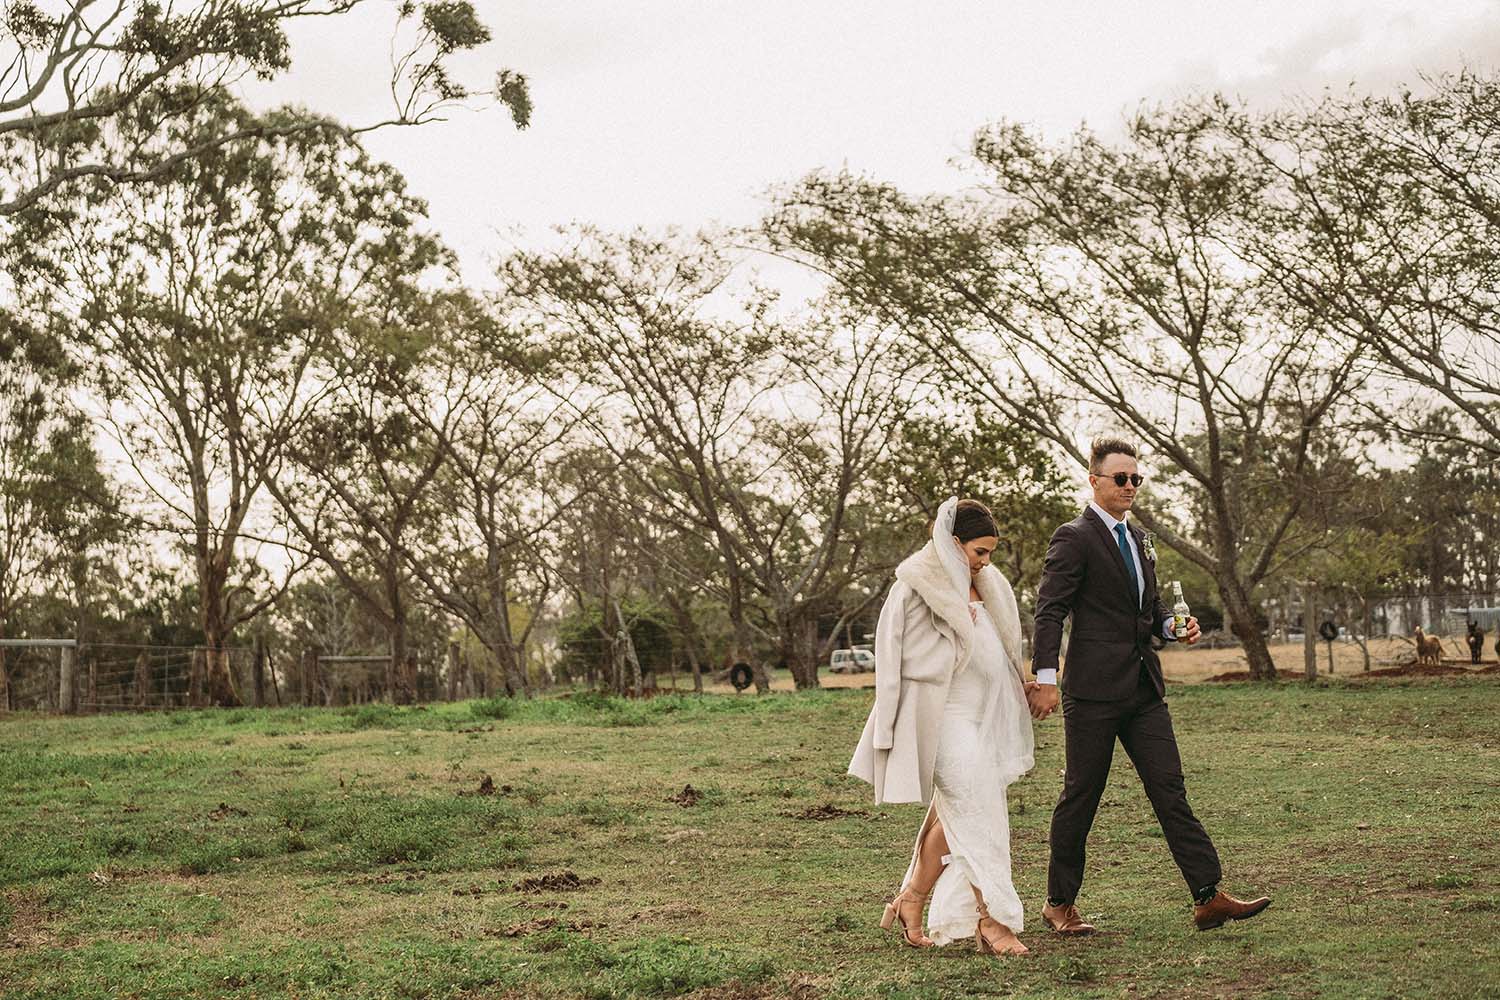 Wedding Photography - Bride and Groom walking